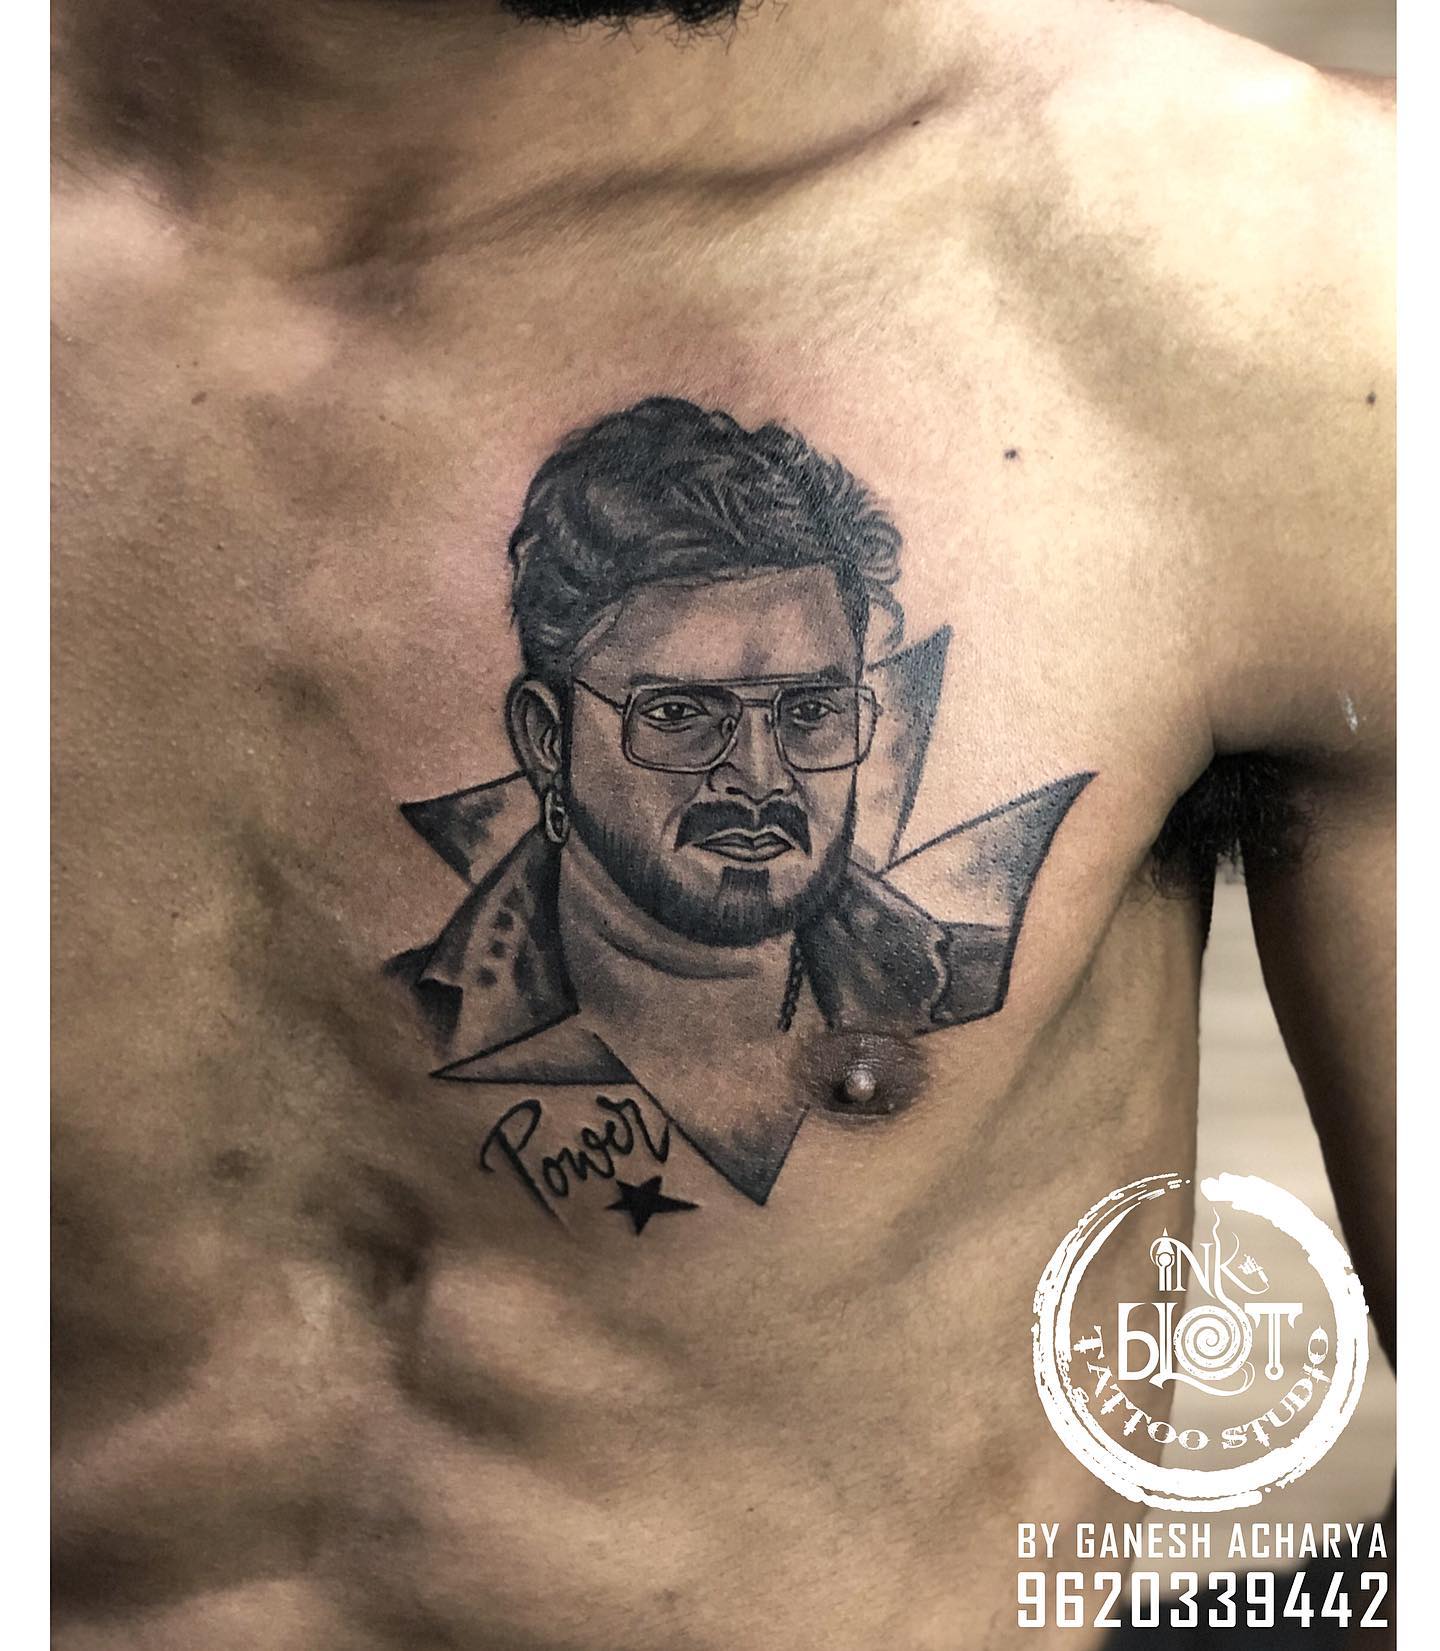 phoenix tattoo lounge on Twitter tattoolifetattoolovers  Thalapathytattoo tamilnadutattooclub karaikal  South Indias 1t master  vijay face tattoo in Phoenix tattoo lounge karaikal  httpstco8xR4mHpowI  Twitter